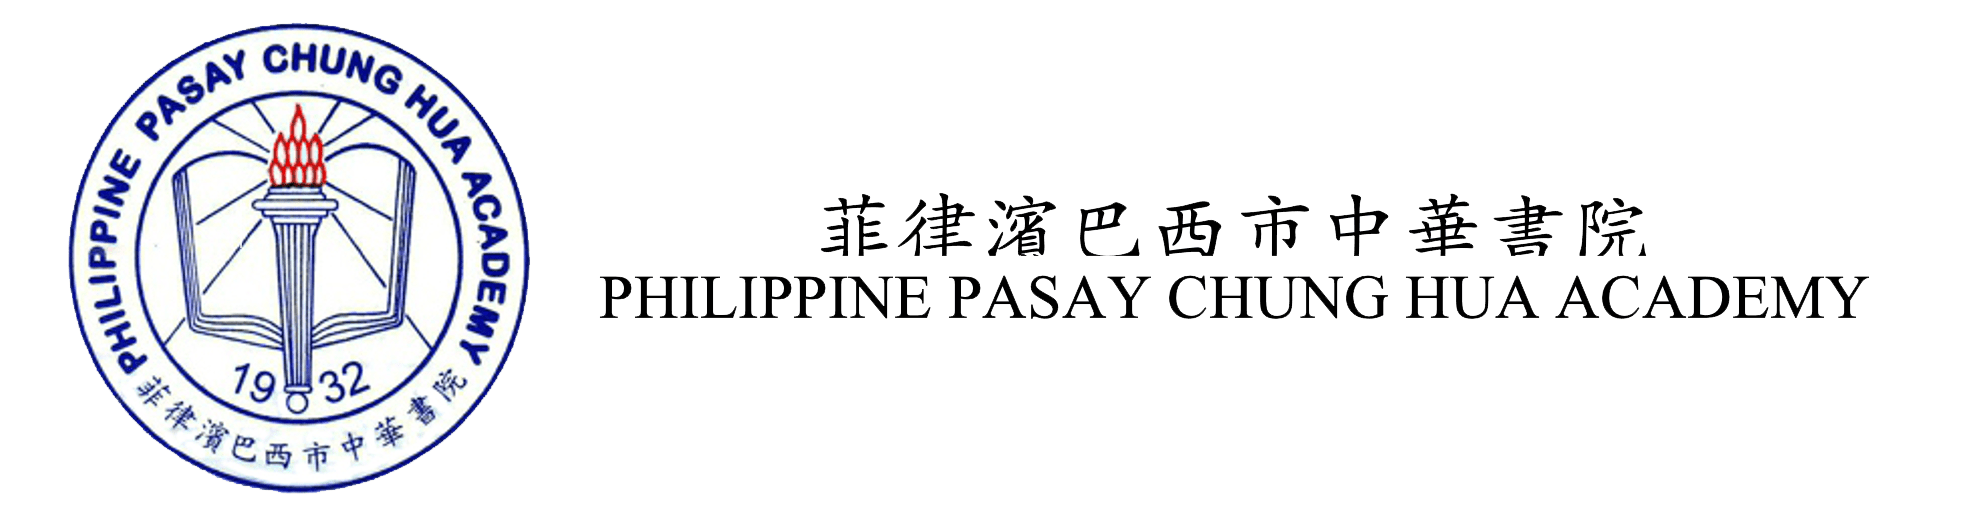 Philippine Pasay Chung Hua Academy